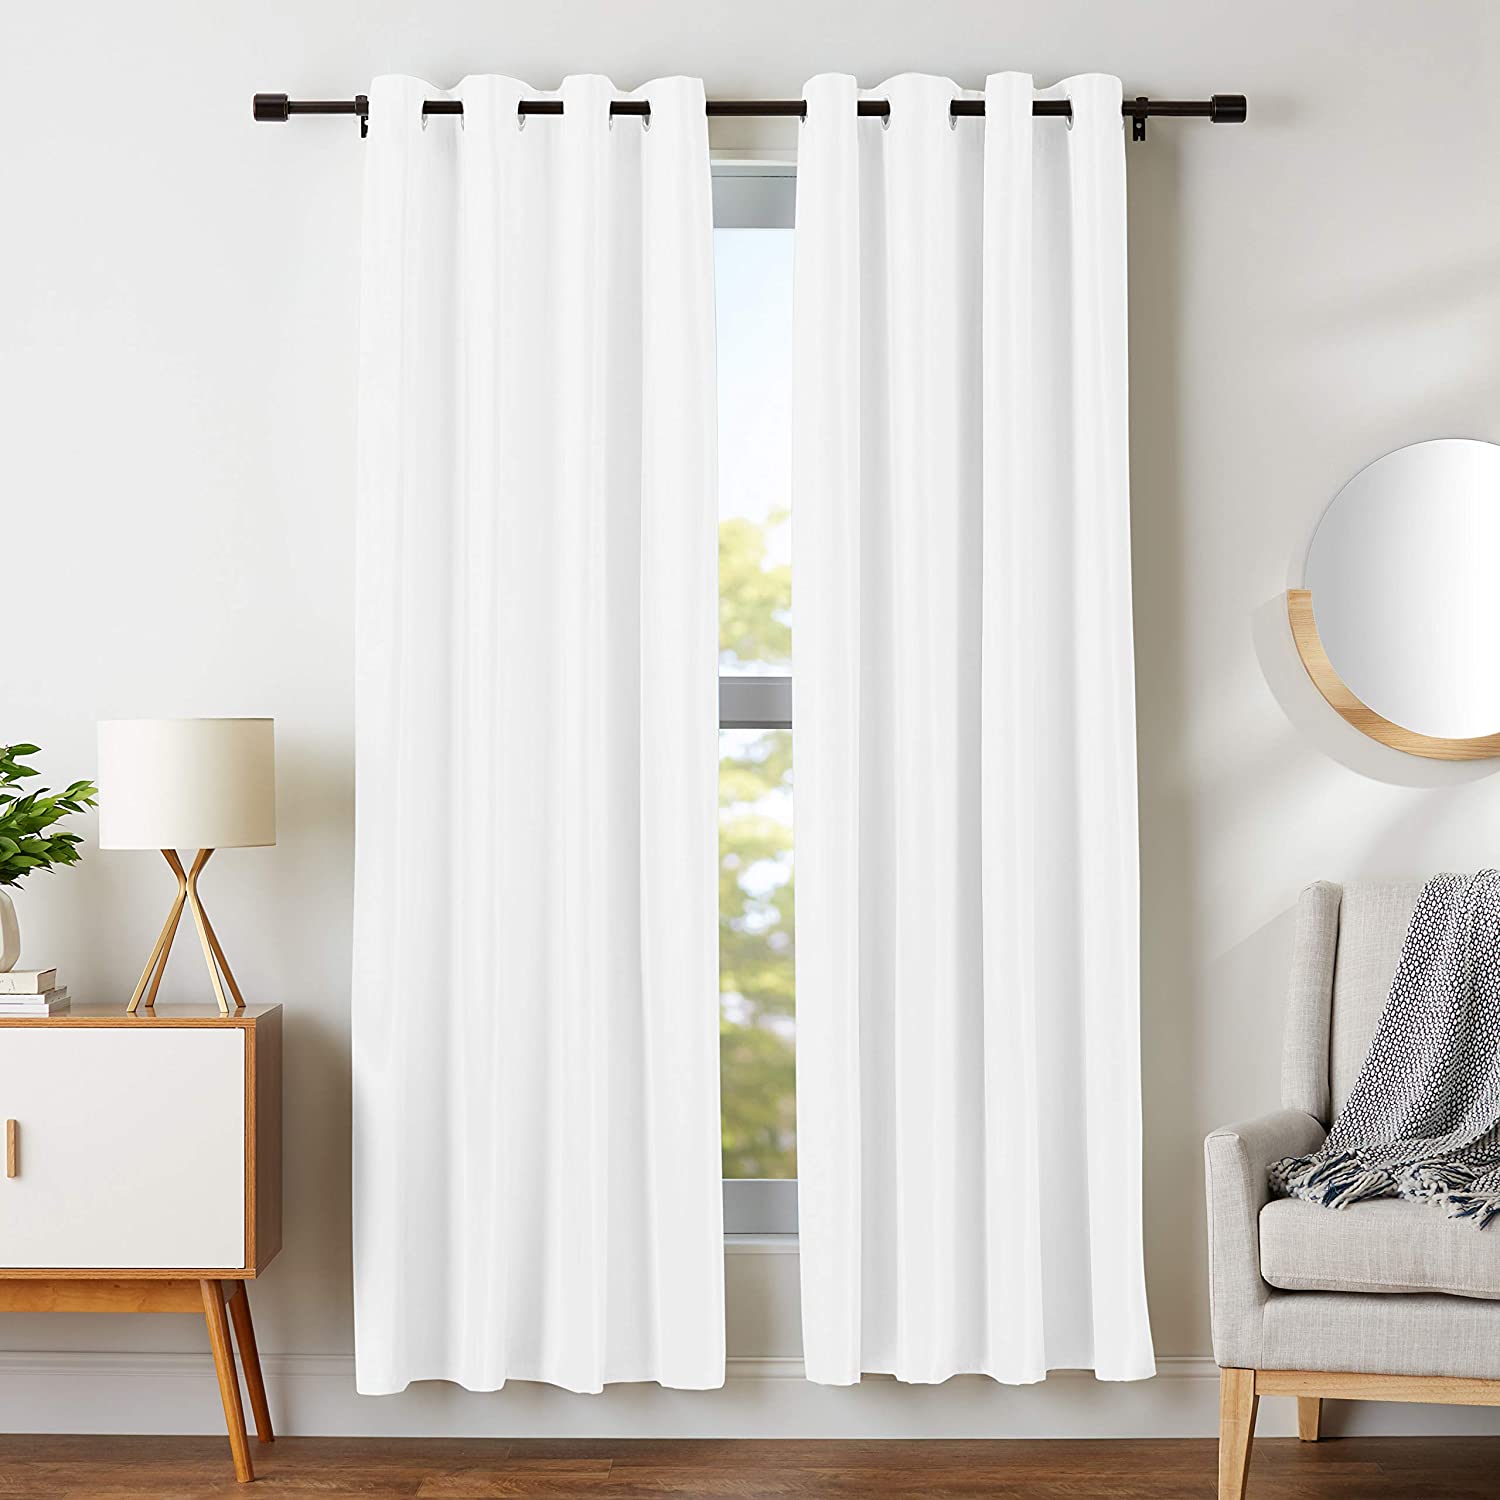 AmazonBasics Sunlight Blocking Energy-Saving Bedroom Curtains